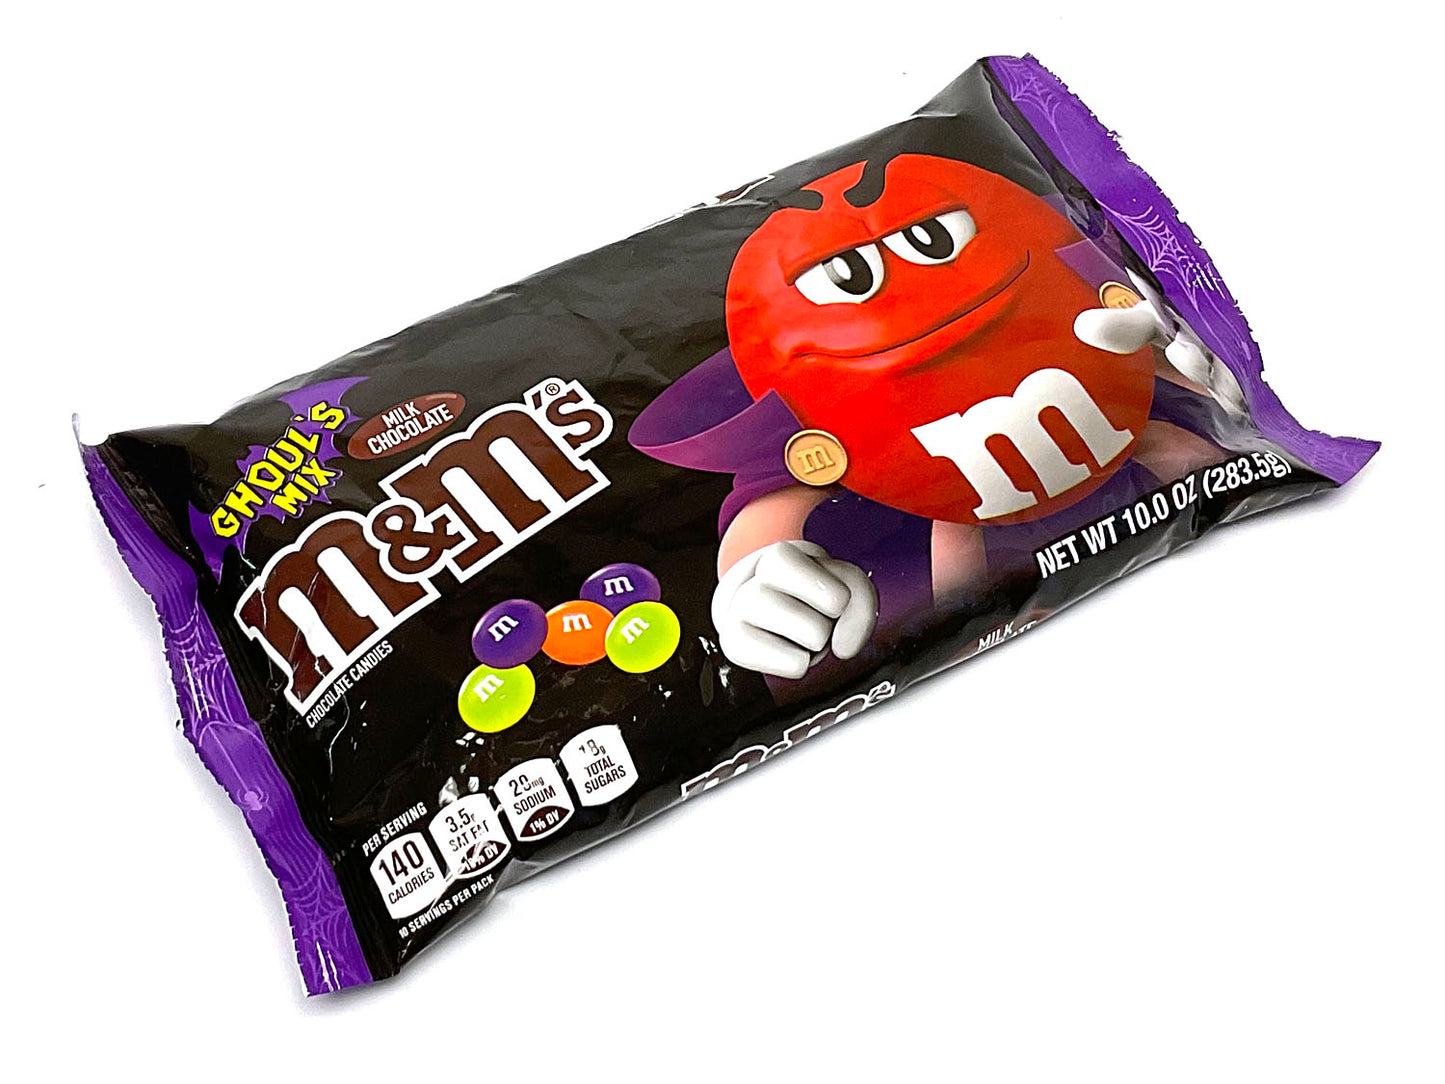 M&M'S Ghoul's Mix Milk Chocolate Halloween Candy Bag, 10 oz - City